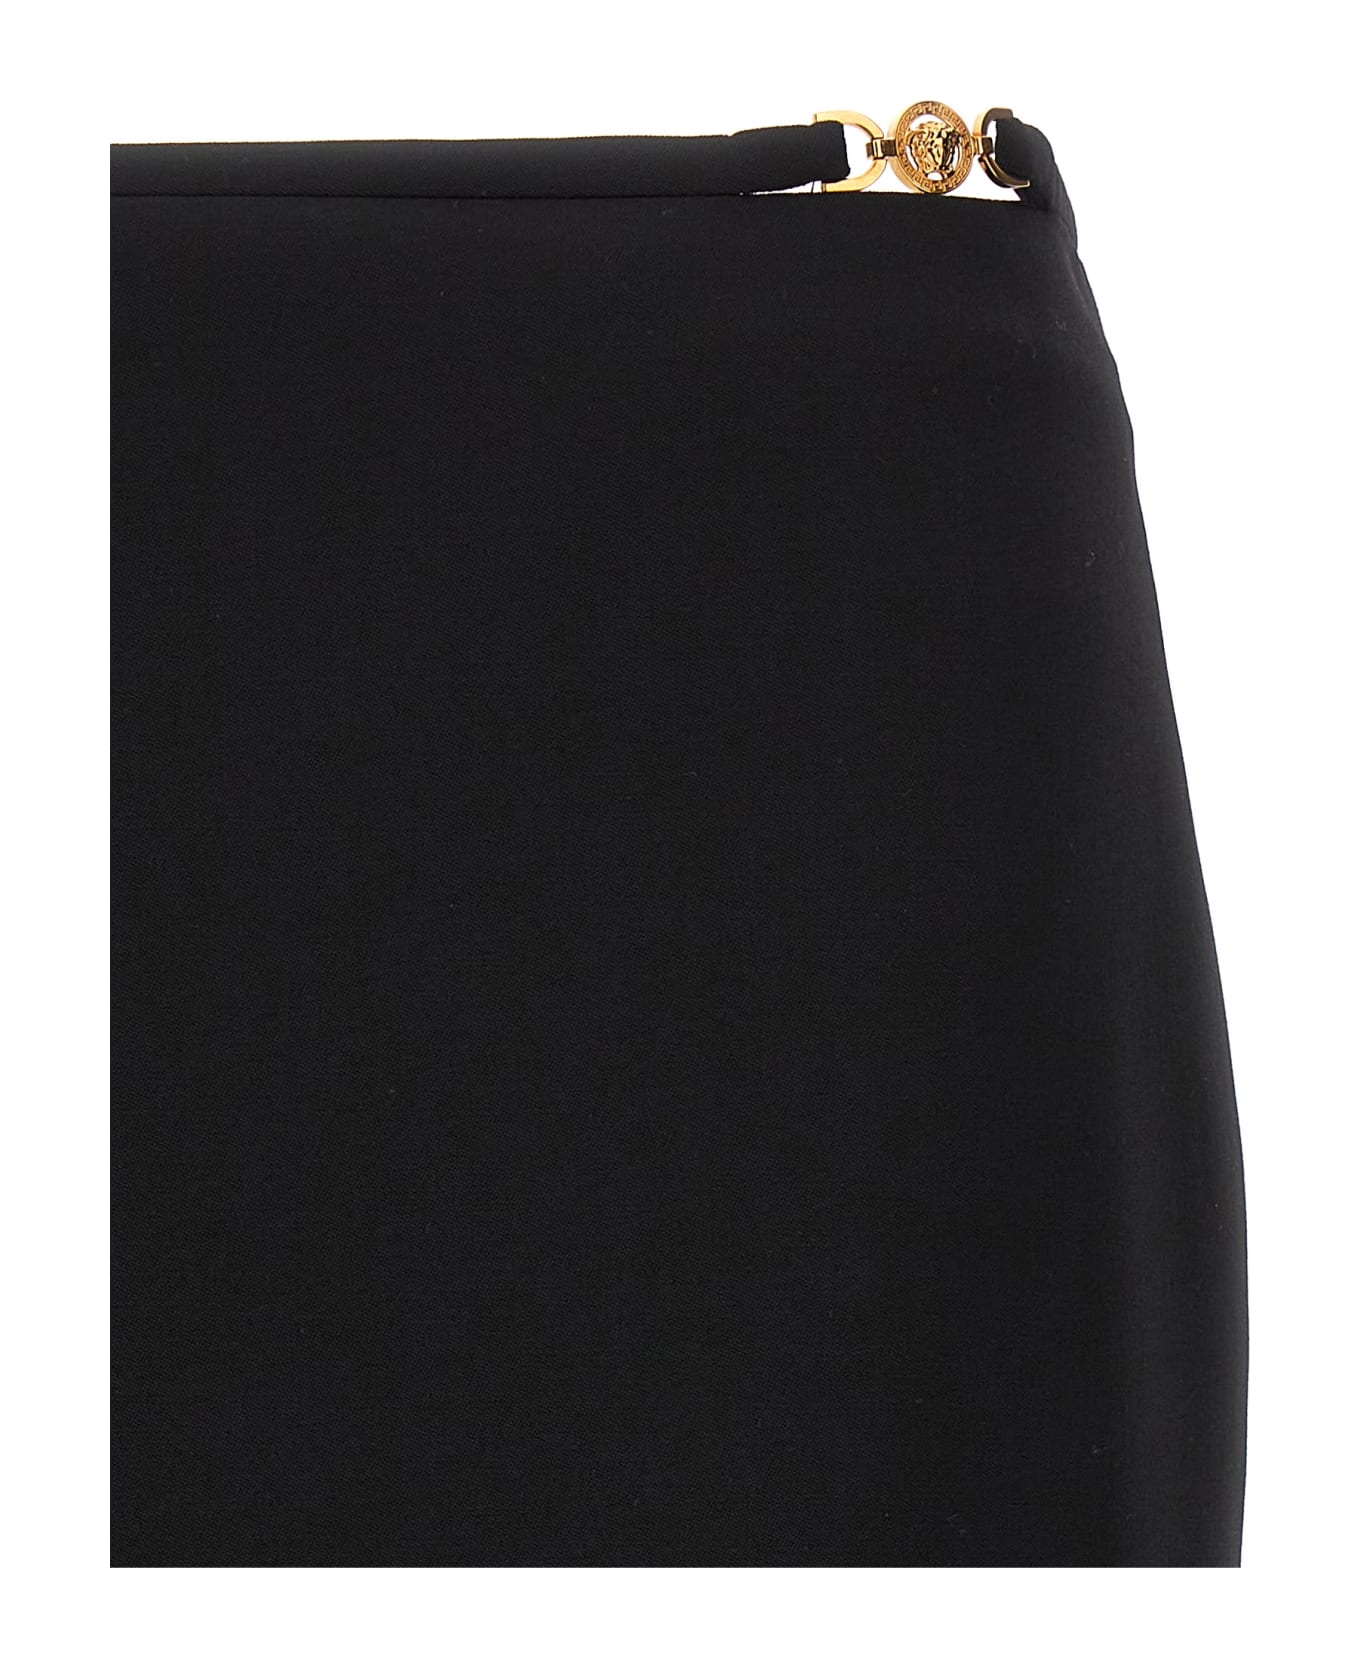 Versace Skirt Stretch Wool Fabric - Black スカート